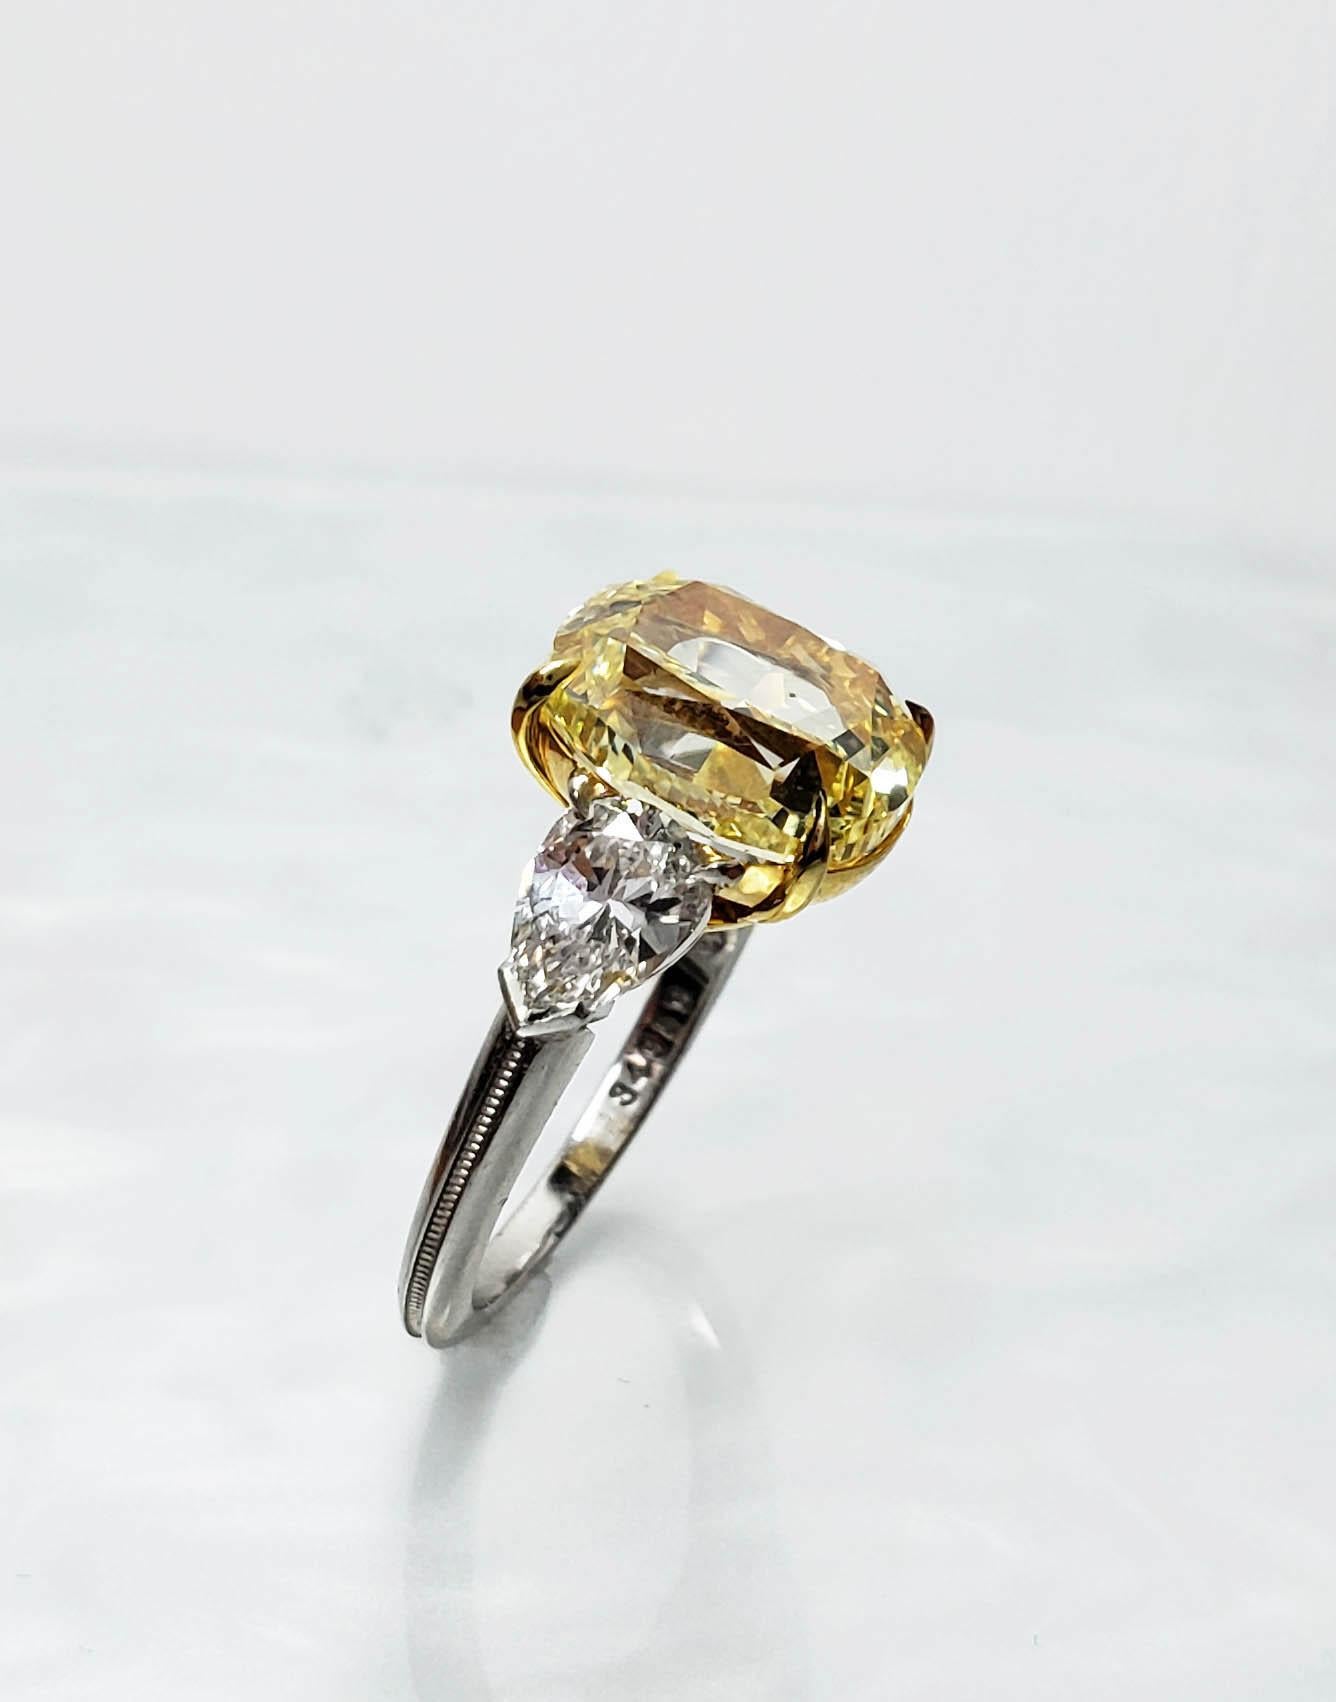 Contemporary Scarselli 5.68 Carat Fancy Intense Yellow Cushion Cut Diamond Ring in Platinum